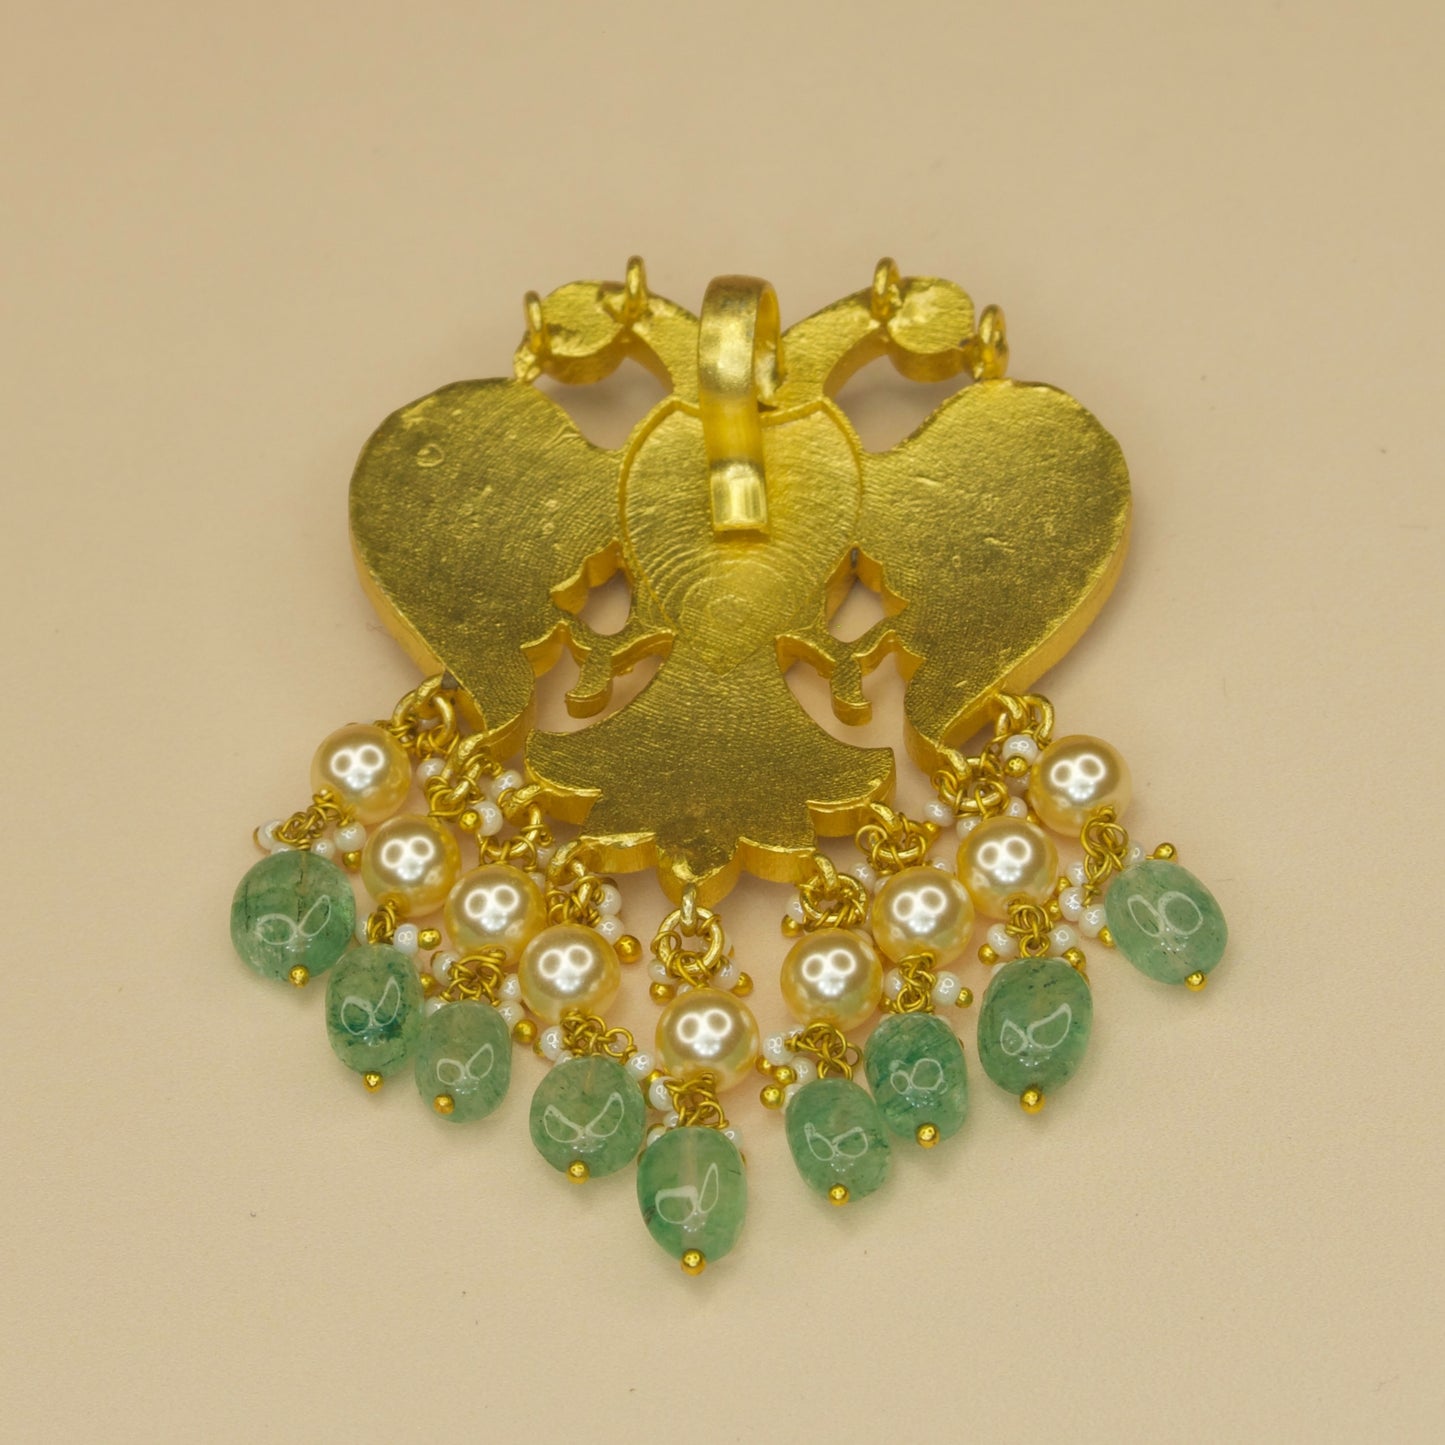 Glorious Peacock Design Jadau Kundan Pendant with 22k gold plating. This Product belongs to Jadau Kundan jewellery Category